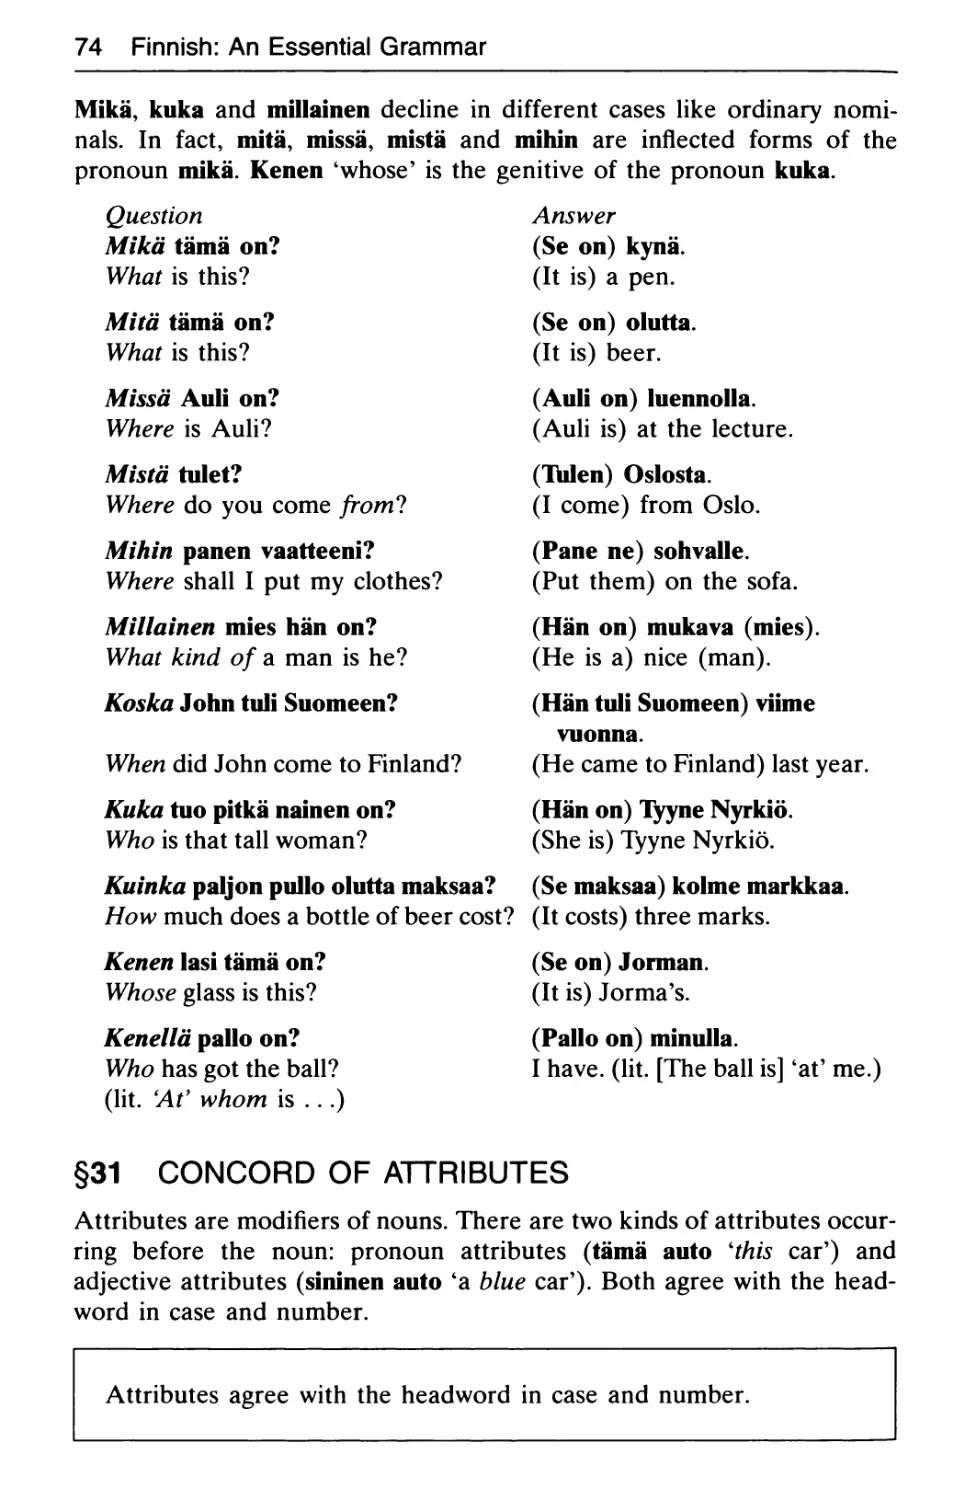 §31 Concord of attributes